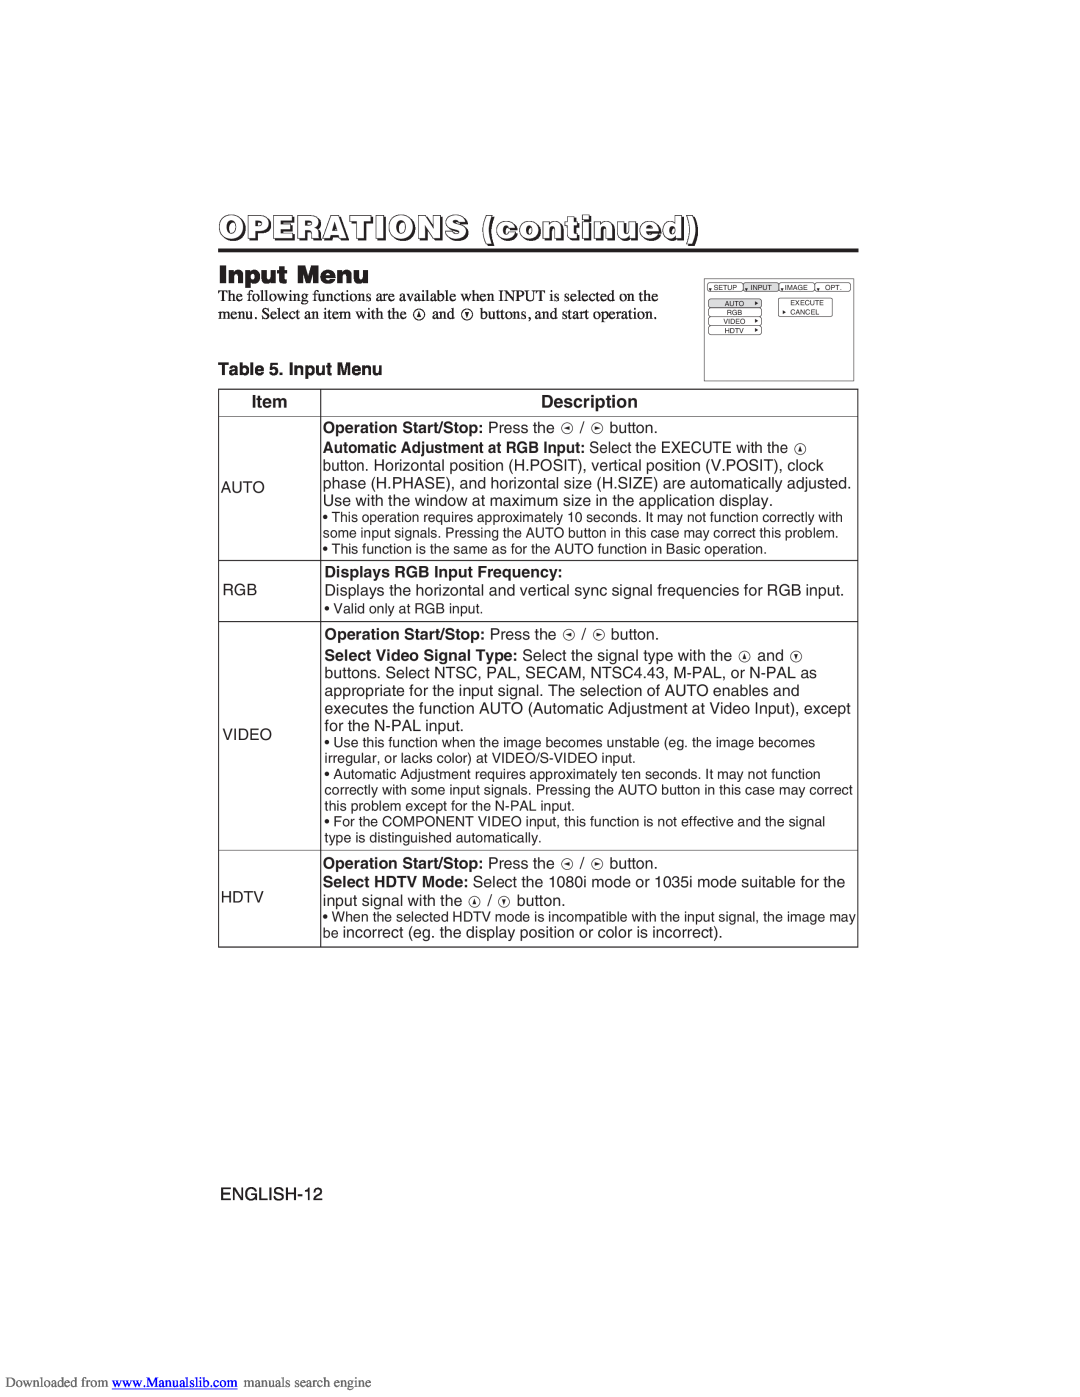 Hitachi CP-X275W user manual Input Menu, OPERATIONS continued, Item, Description 